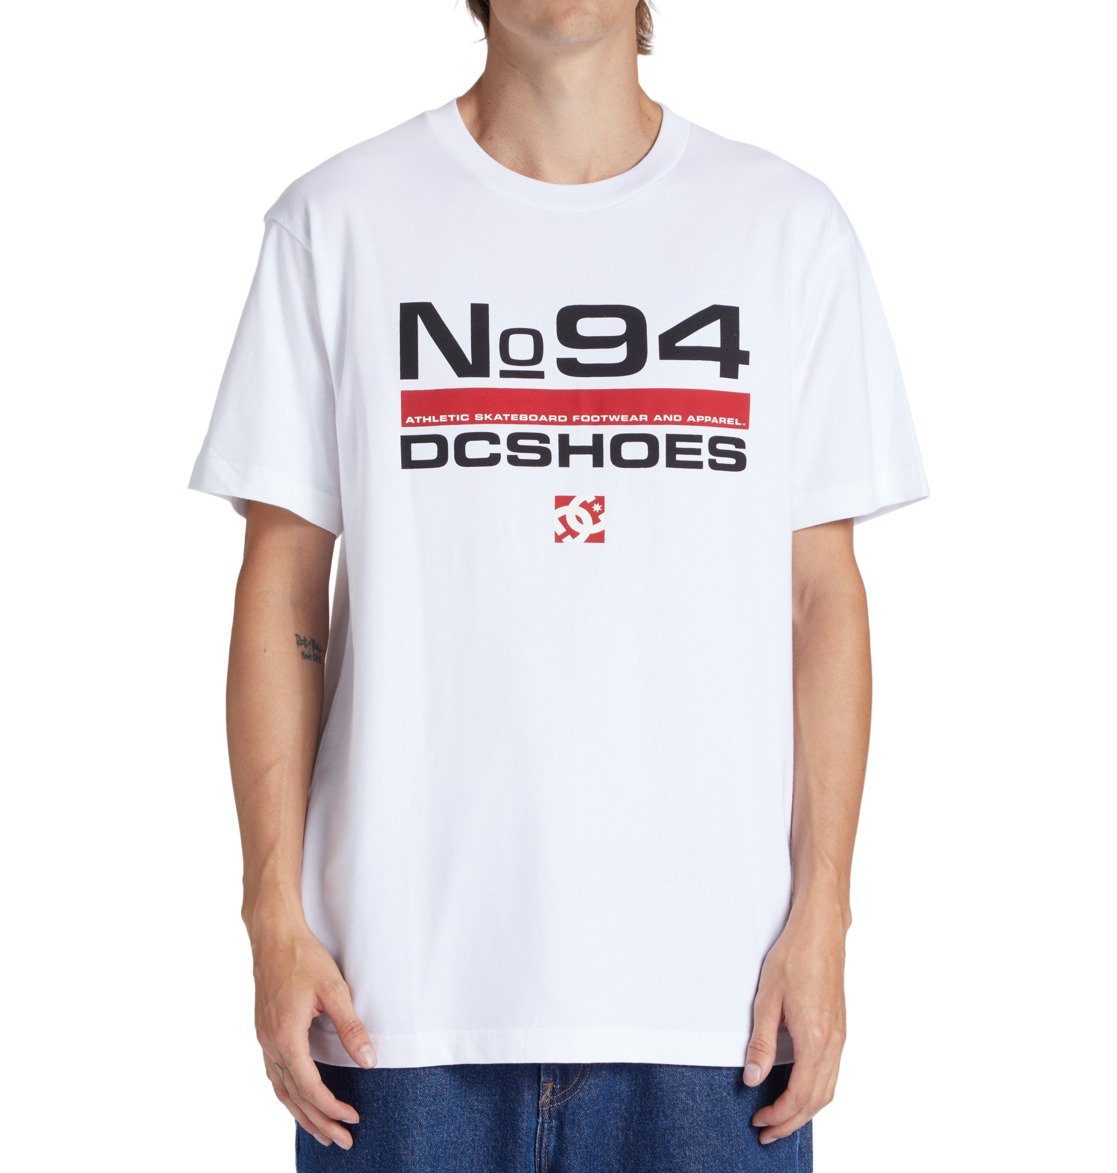 DC Shoes T-Shirt Nine Four White